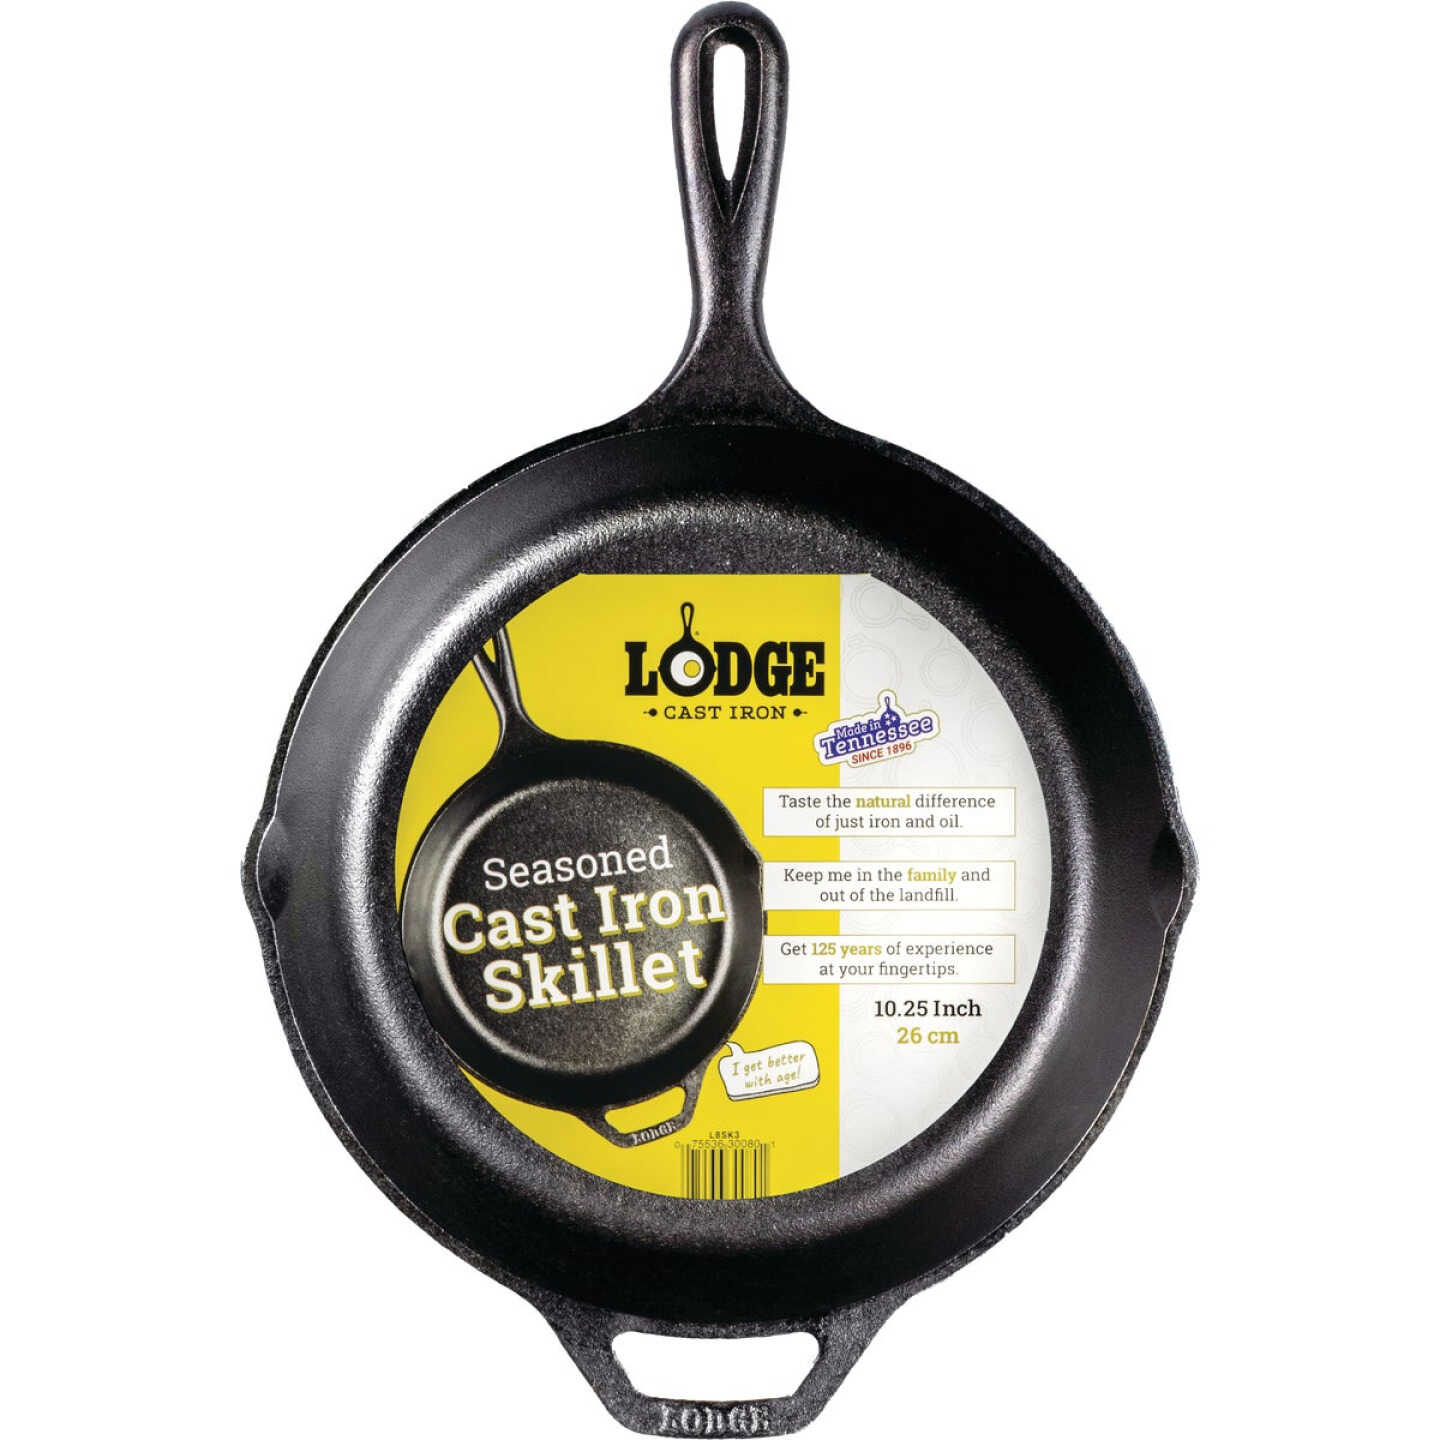 Lodge 13.25 inch Dual Handle Pan